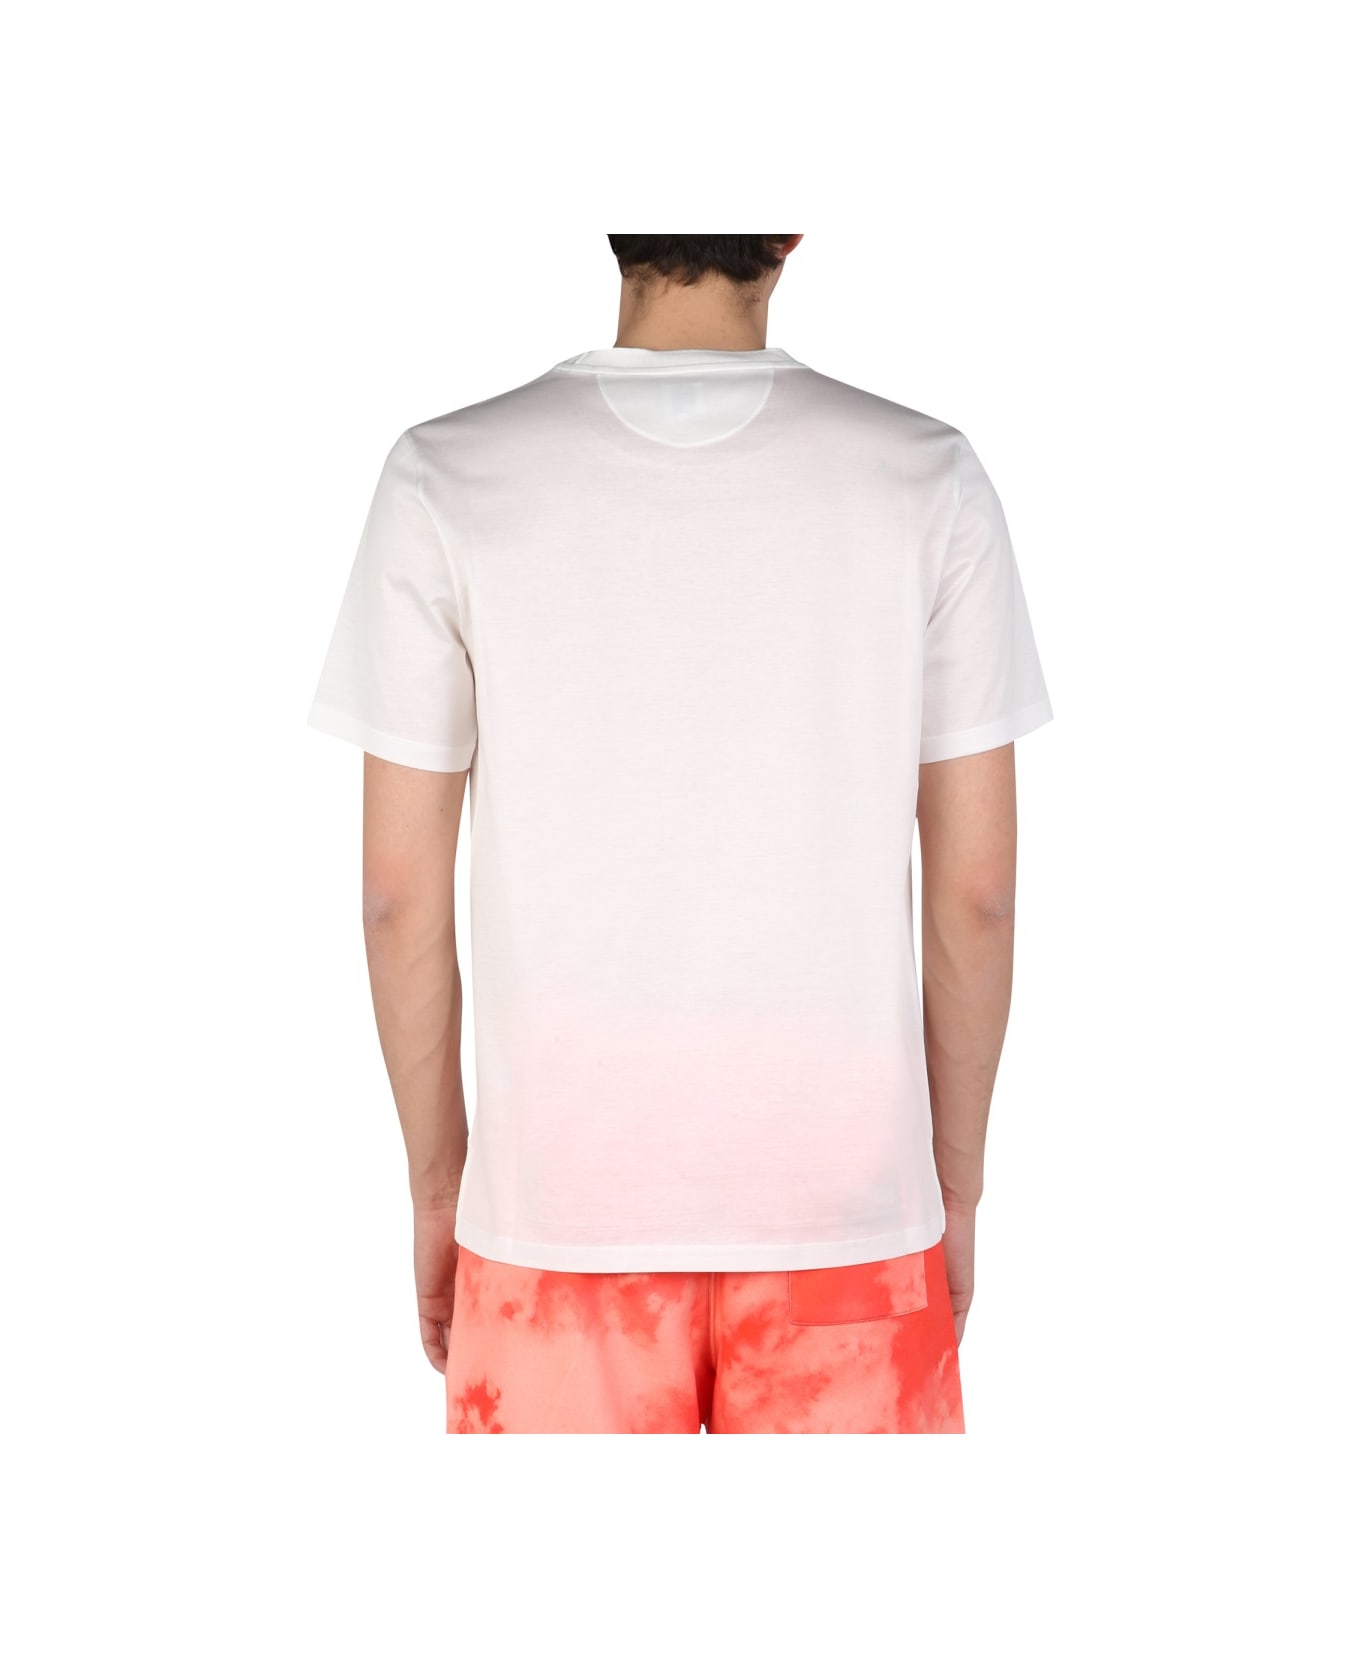 Paul Smith Signature Stripe T-shirt - WHITE